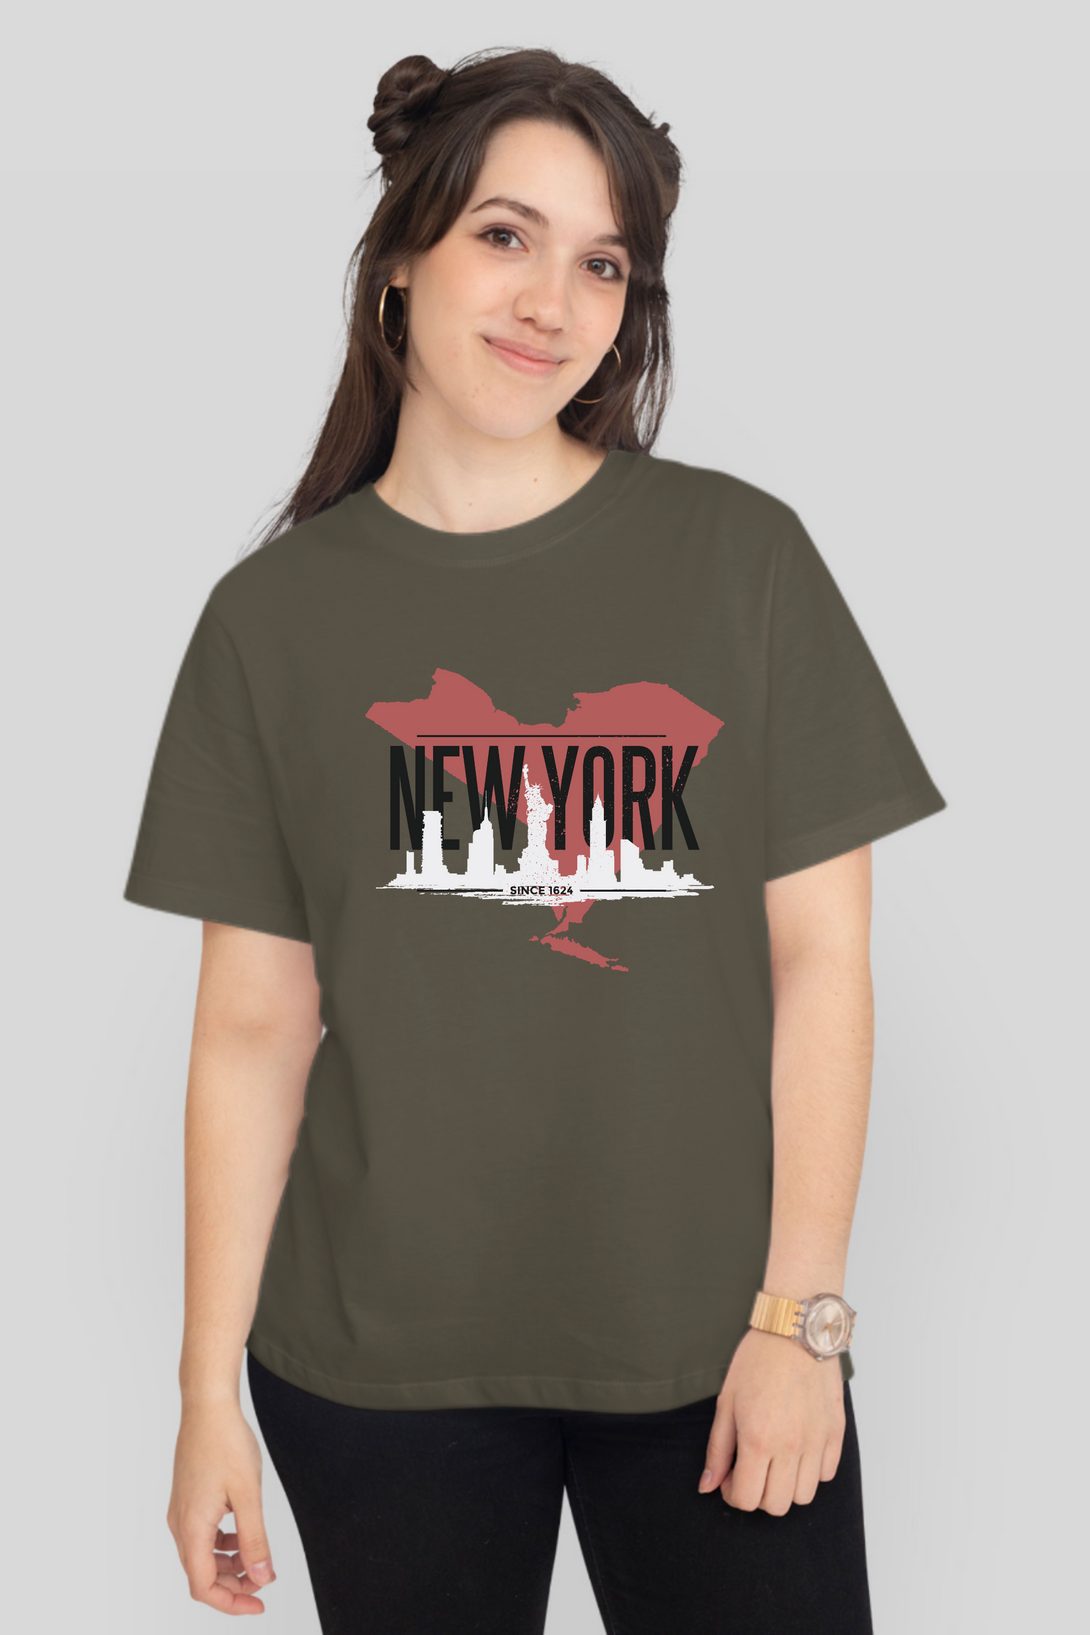 Nyc Skyline Printed T-Shirt For Women - WowWaves - 7